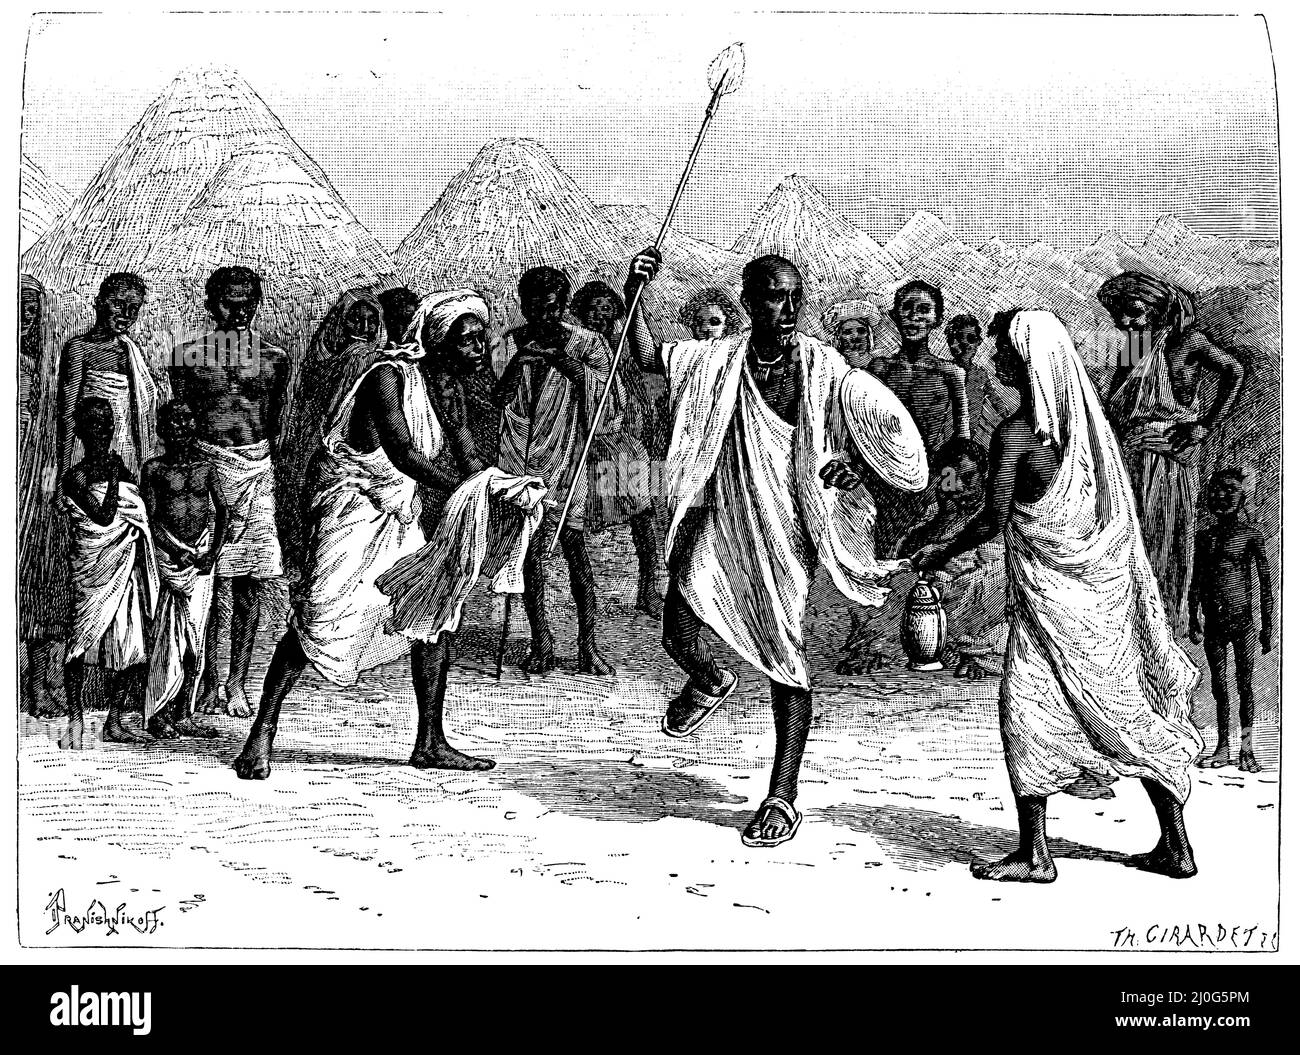 Somali musicians, , Th. Girardet (literary history book, 1894), Somali-Musiker, Musicien somalien Stock Photo